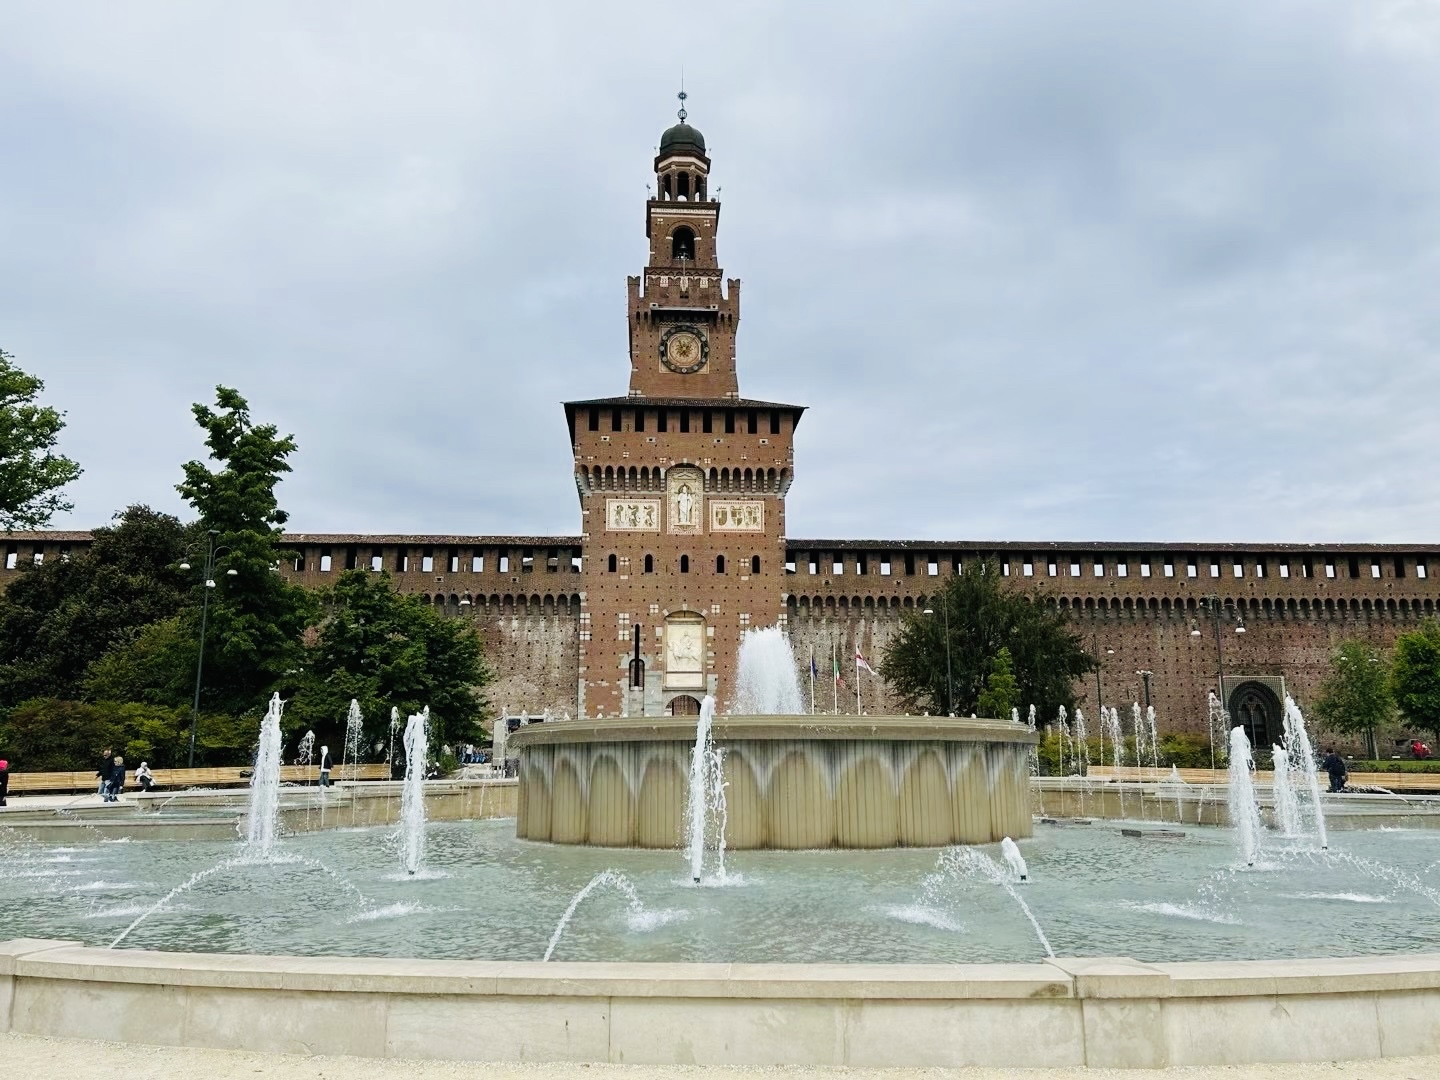 Milan (二） 从住所走八、九分钟便是米兰著名景点之一斯福尔扎城堡 (The Sforza Ca